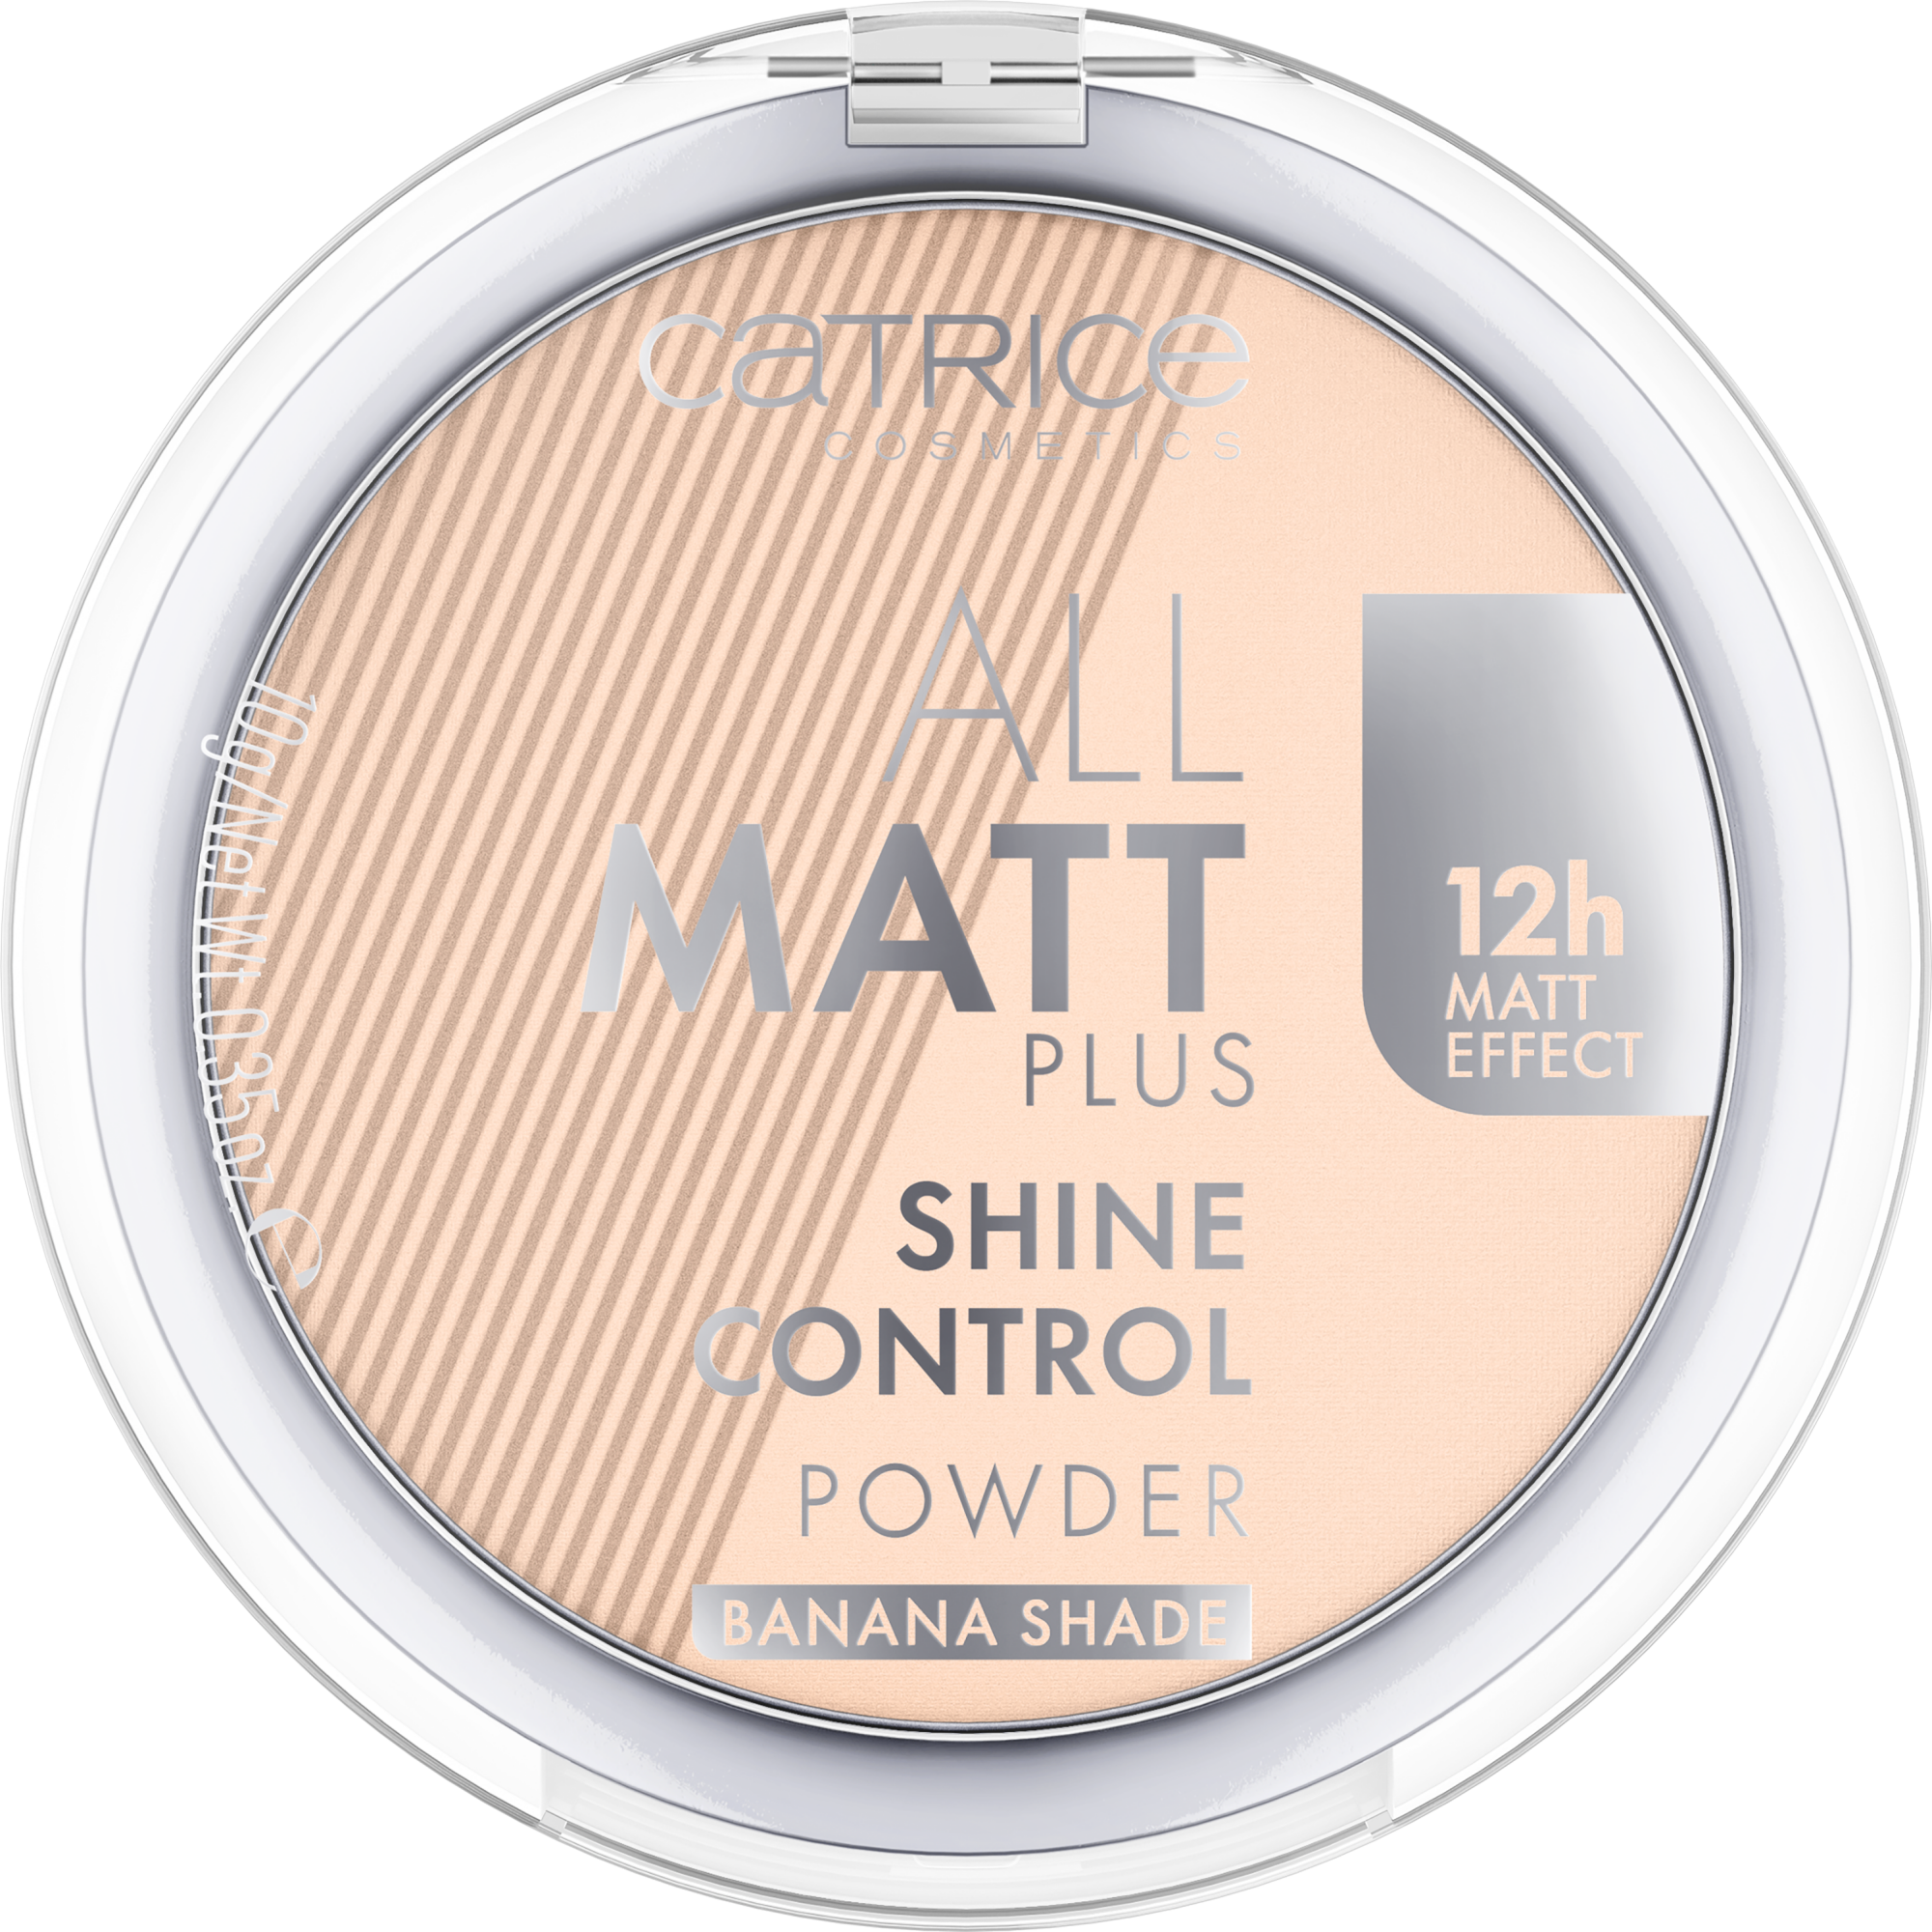 All Matt Plus Shine Control Puder